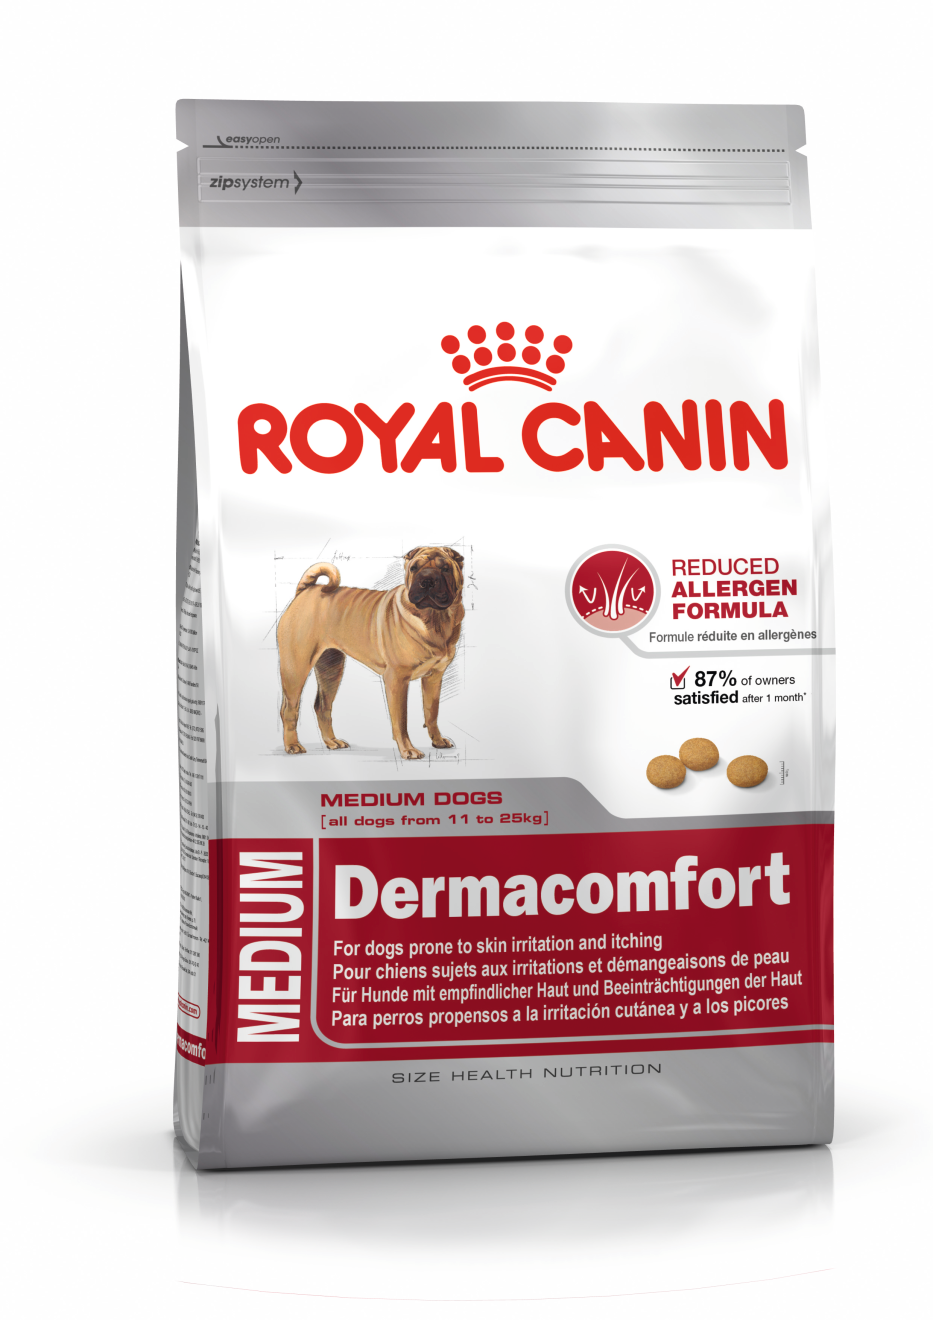 royal canin medium